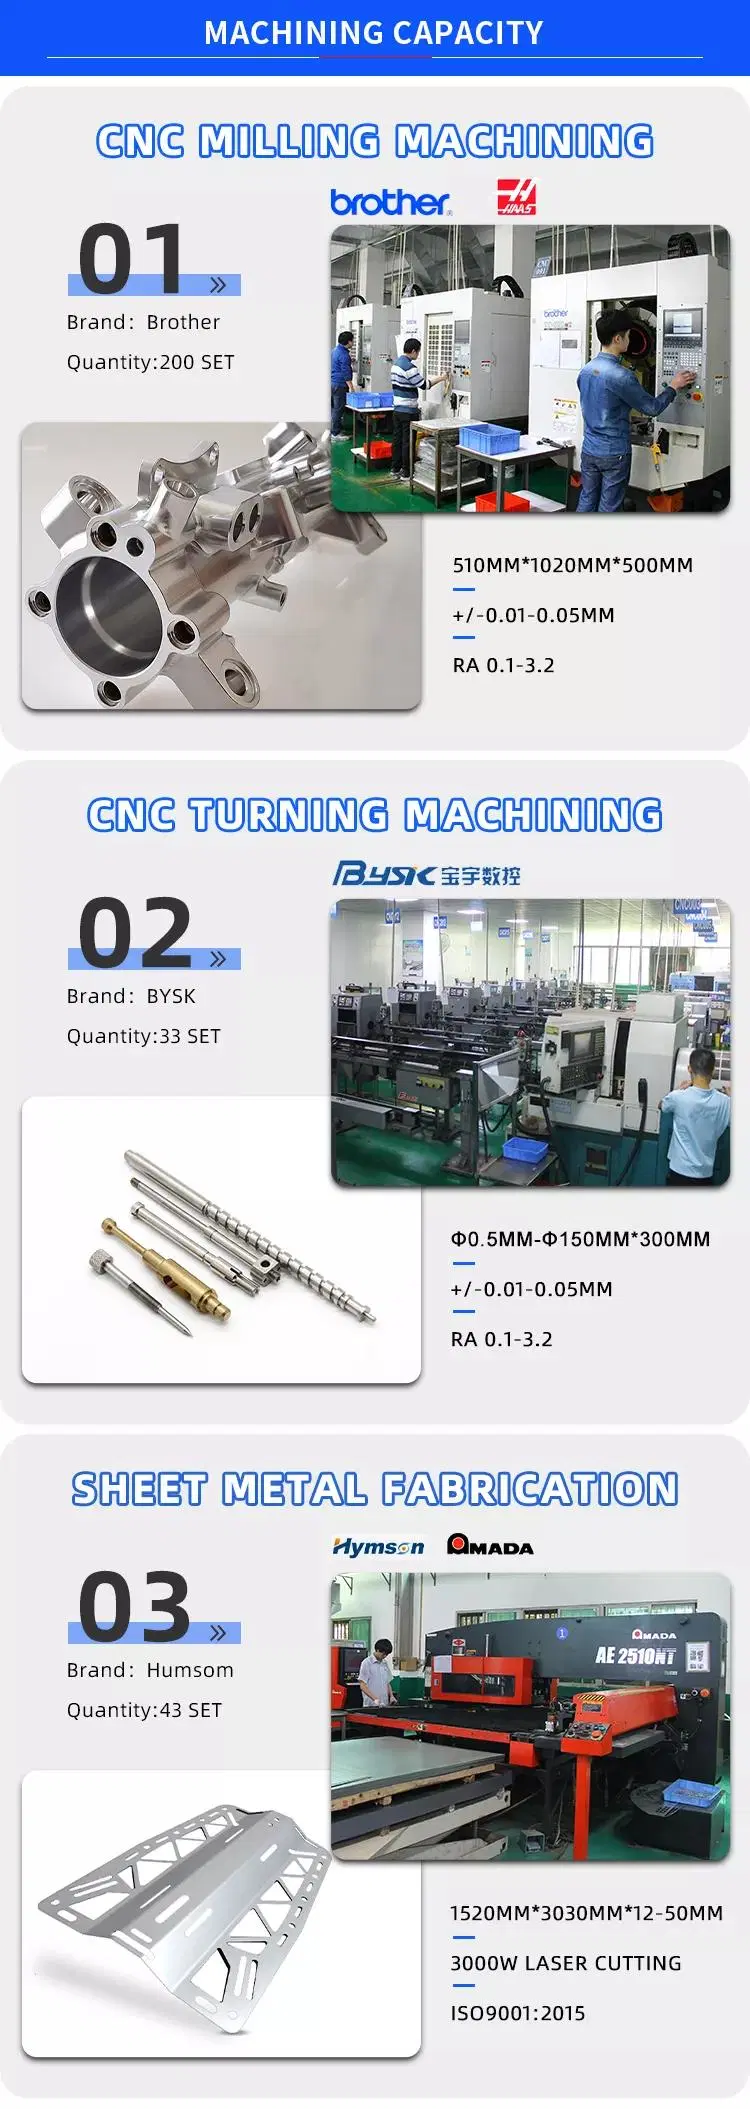 Custom CNC Machining Services Precision Aluminum 5 Axis CNC Parts